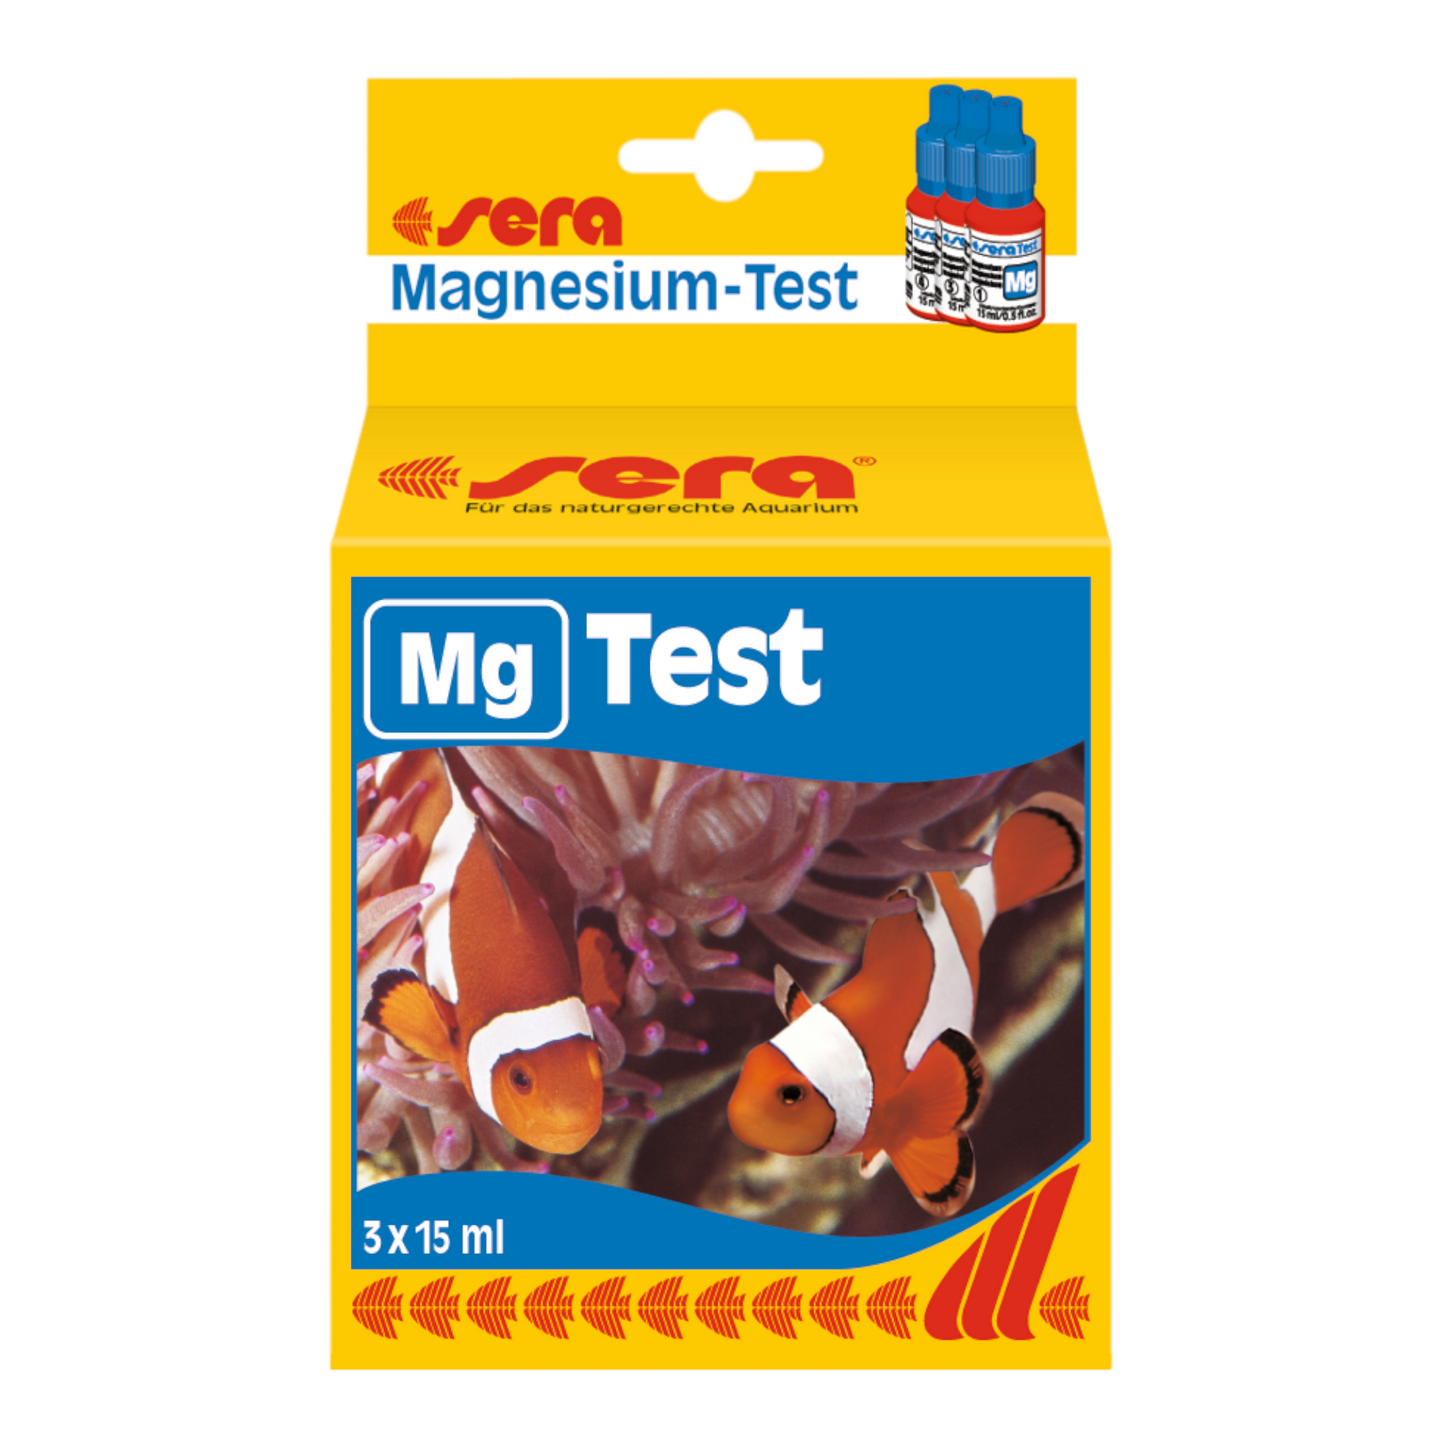 sera Magnesium-Test (Mg)